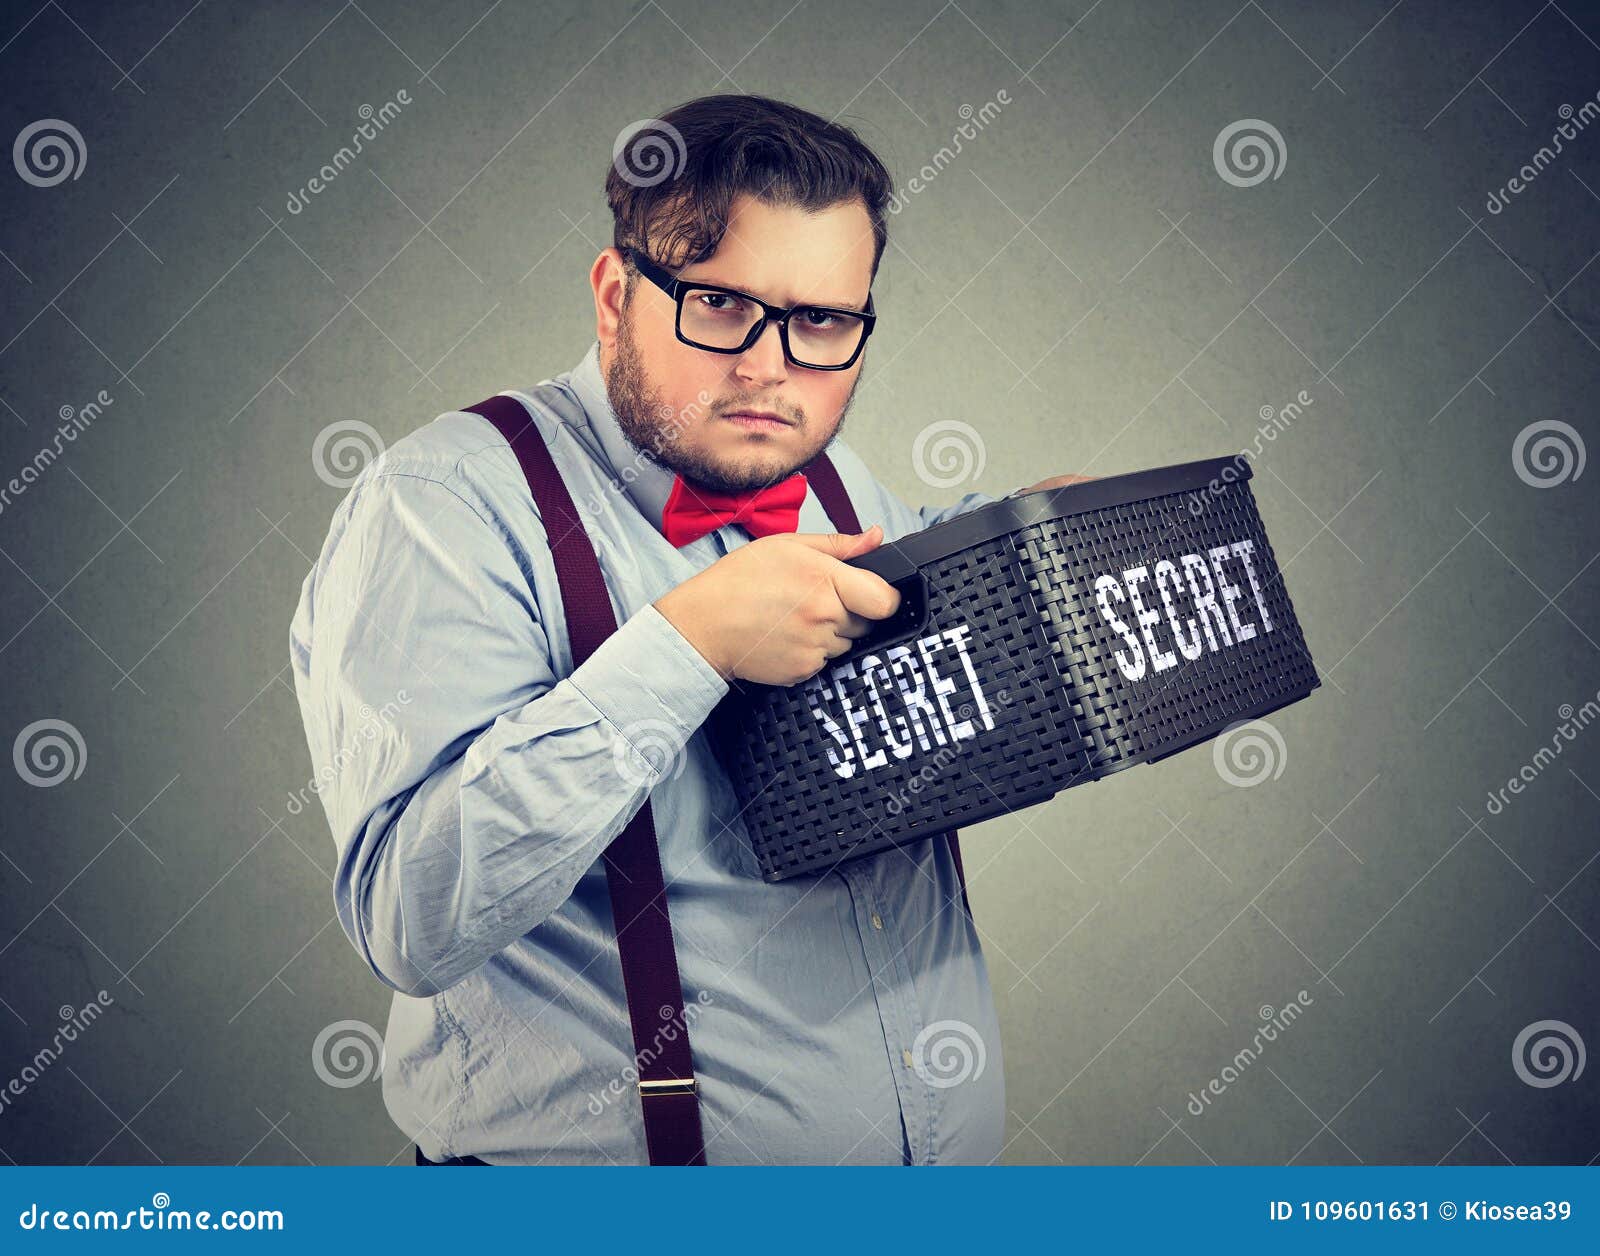 suspicious business man keeping secrets